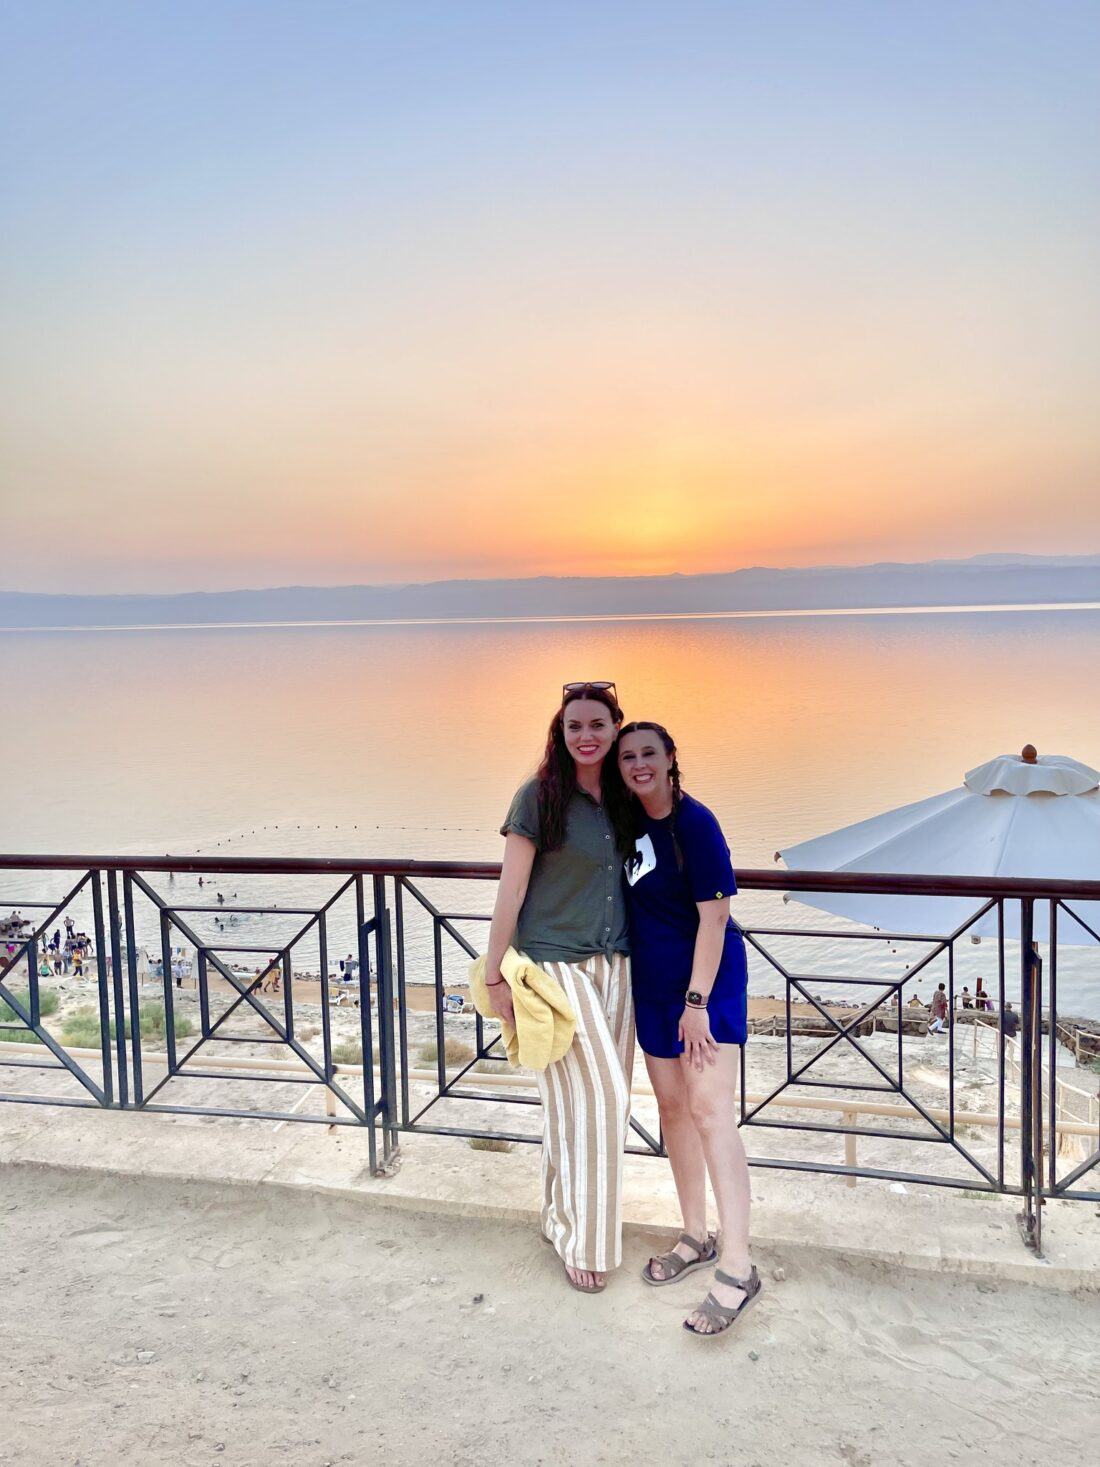 Dead Sea Resort